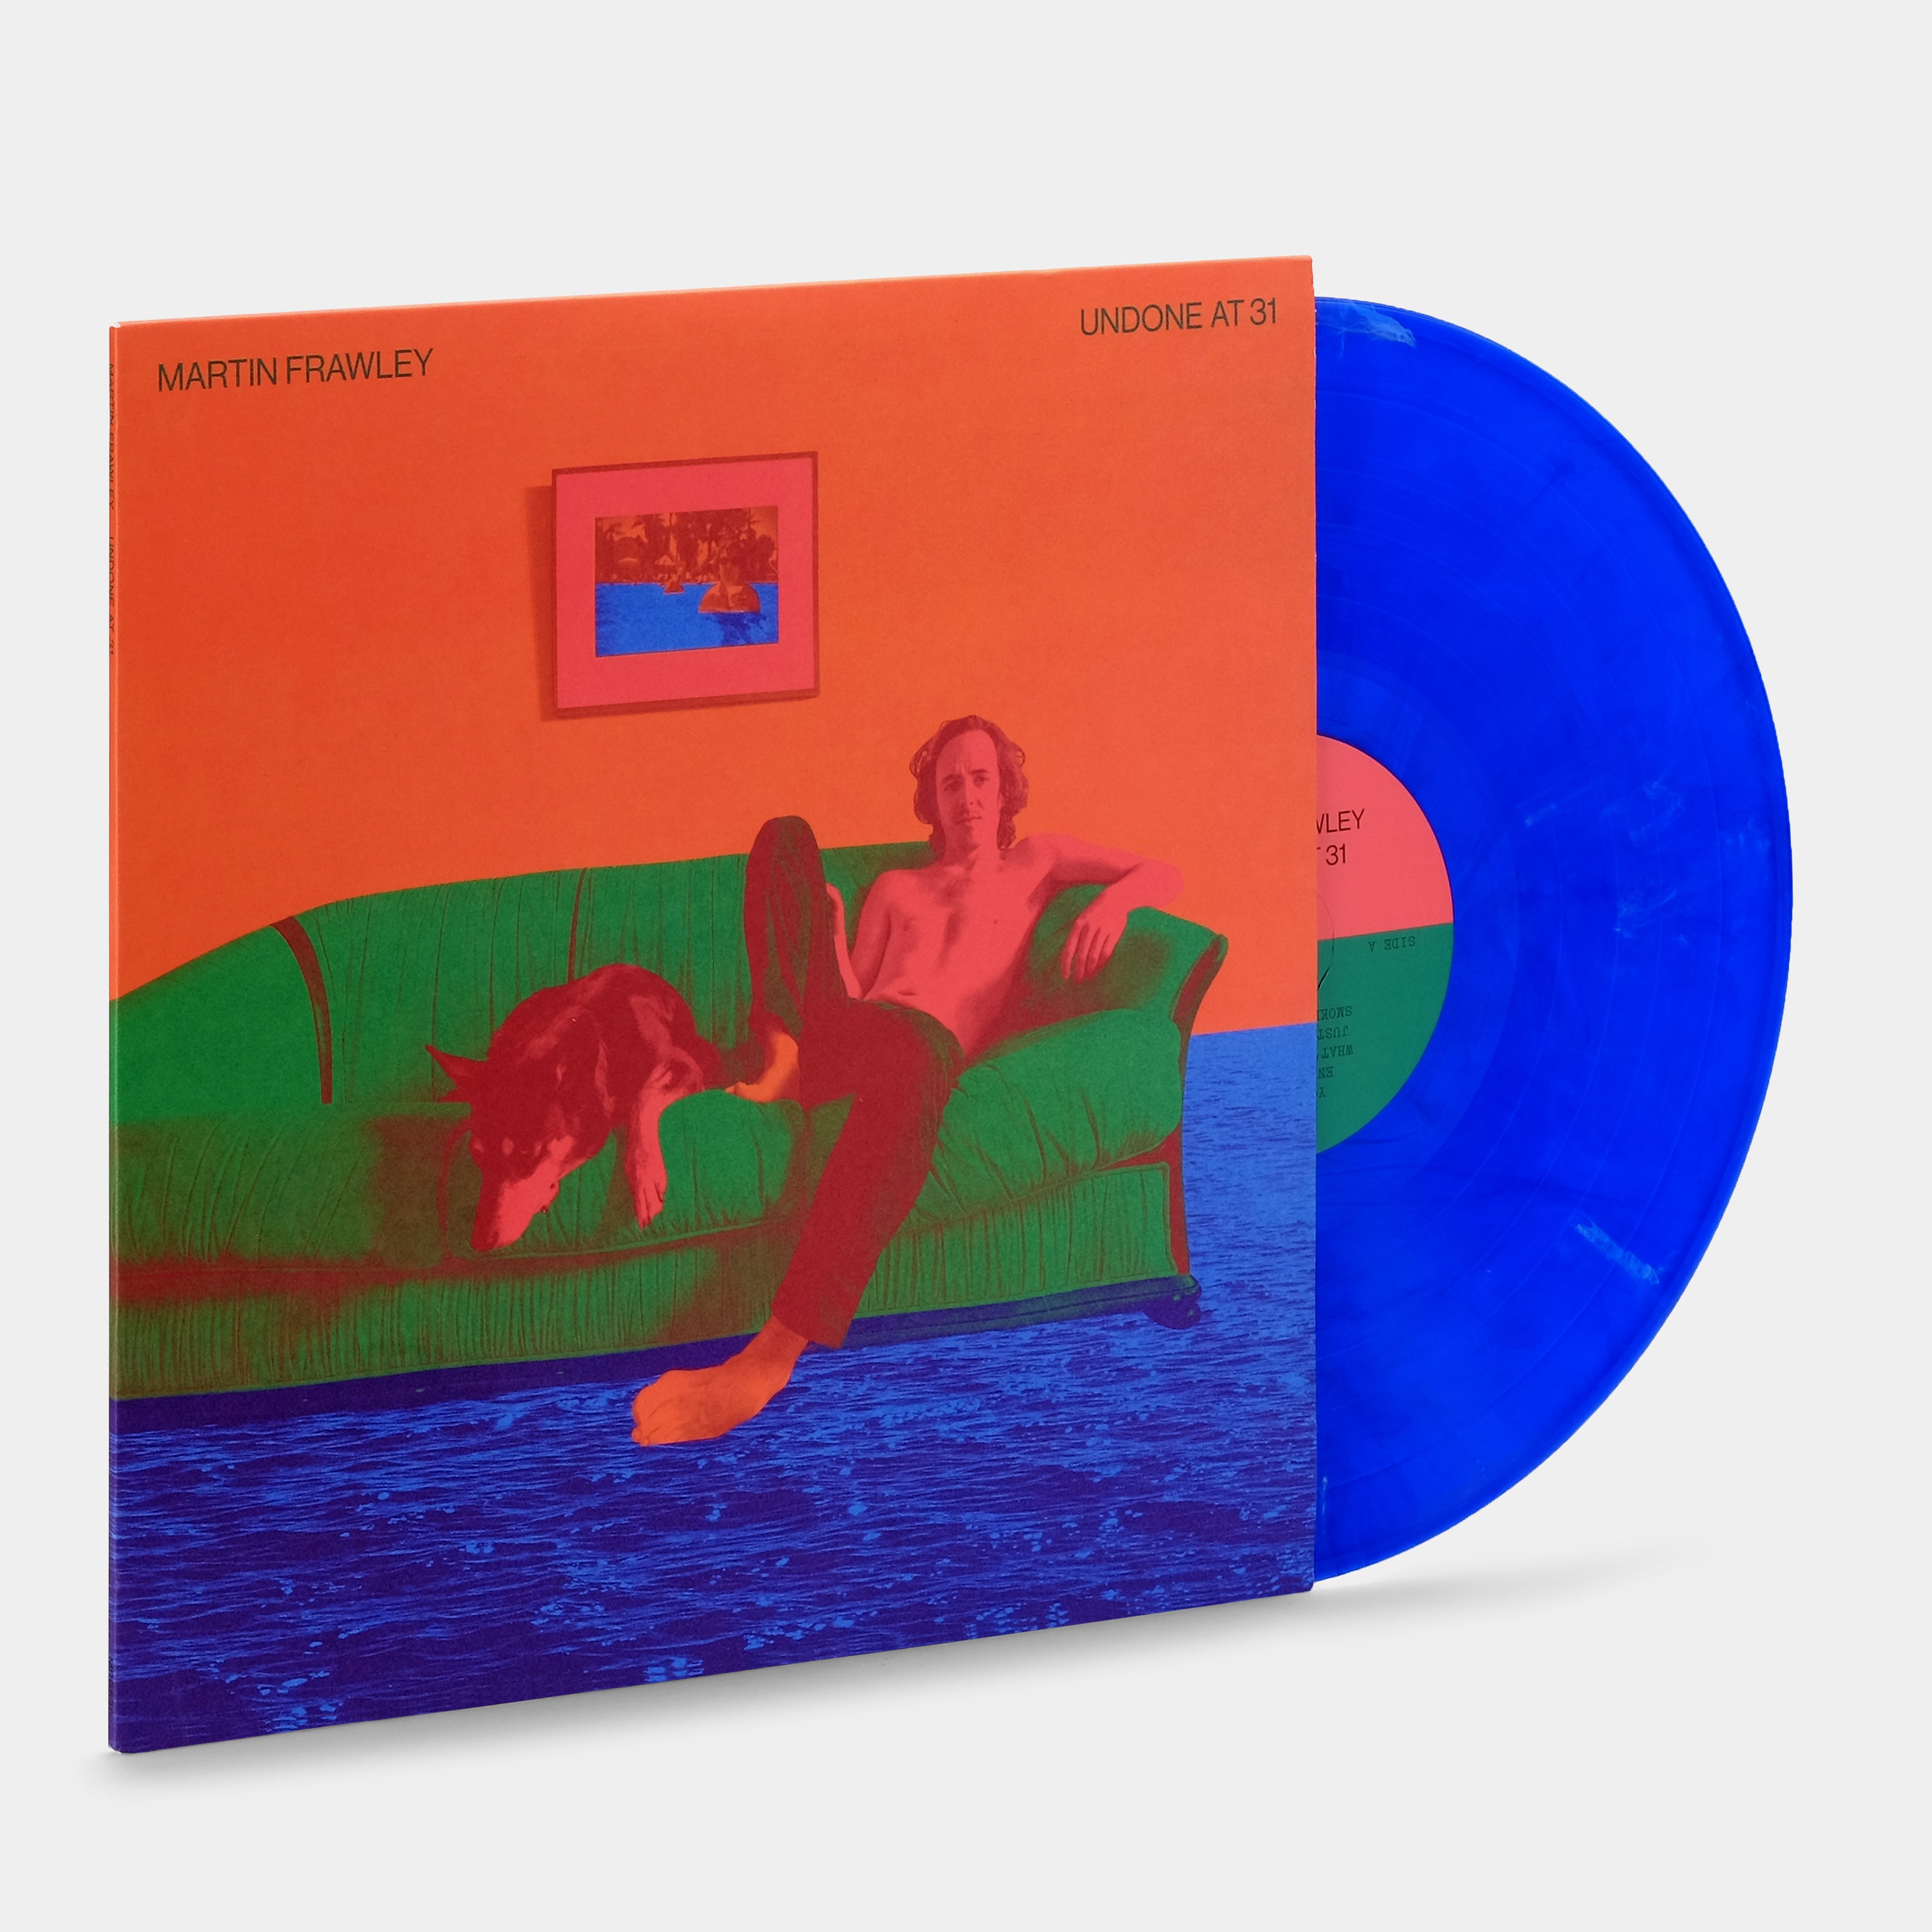 Martin Frawley - Undone At 31 (Peak Vinyl Edition) Blue & White LP Vinyl Record